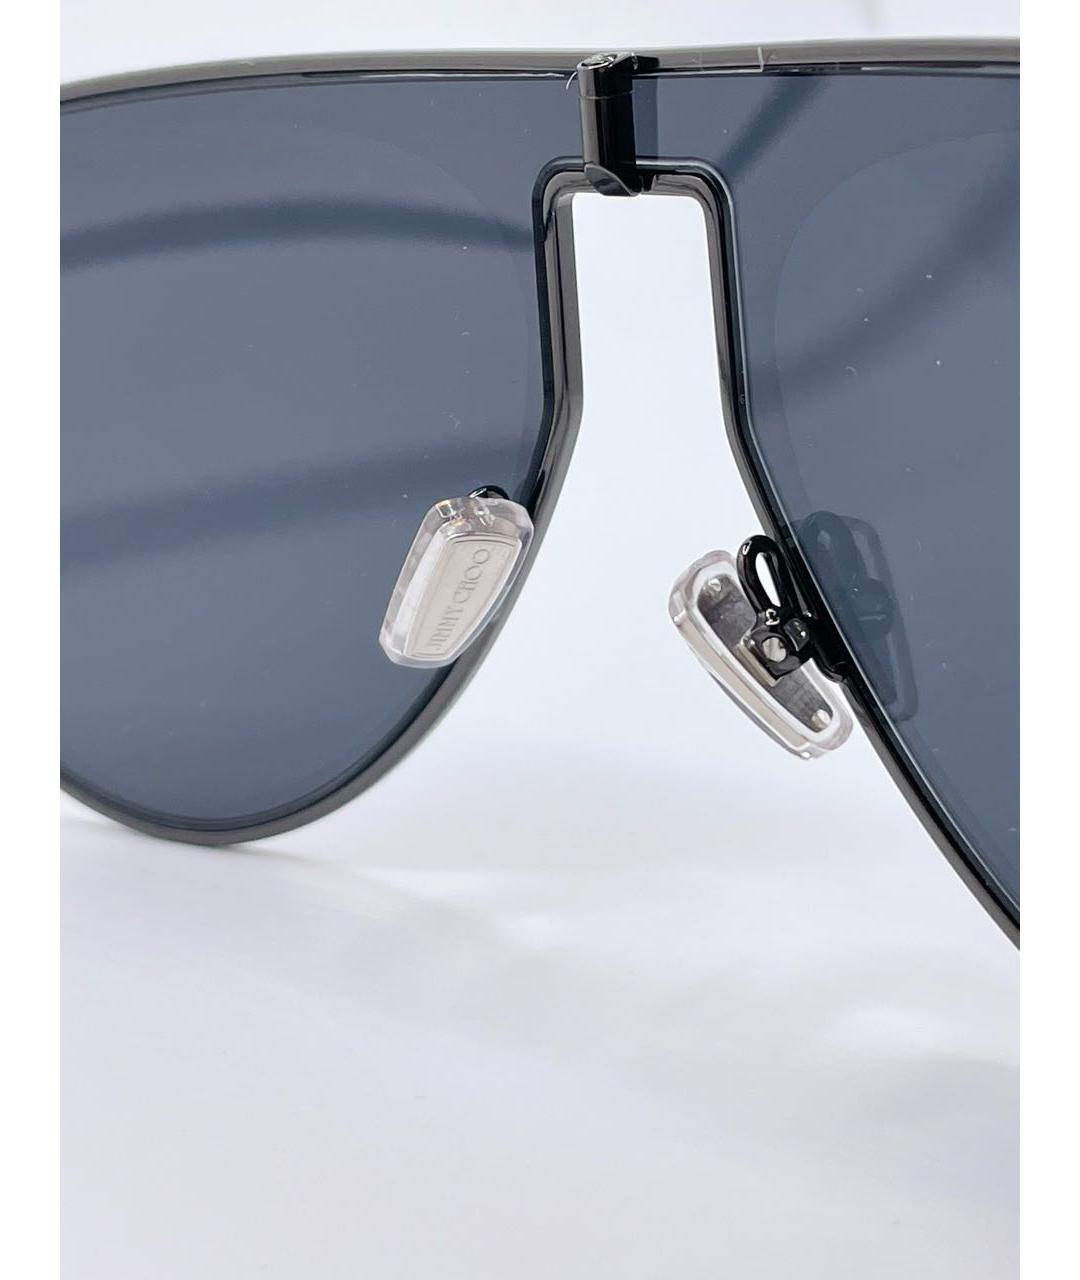 JIMMY CHOO Серые металлические солнцезащитные очки, фото 3